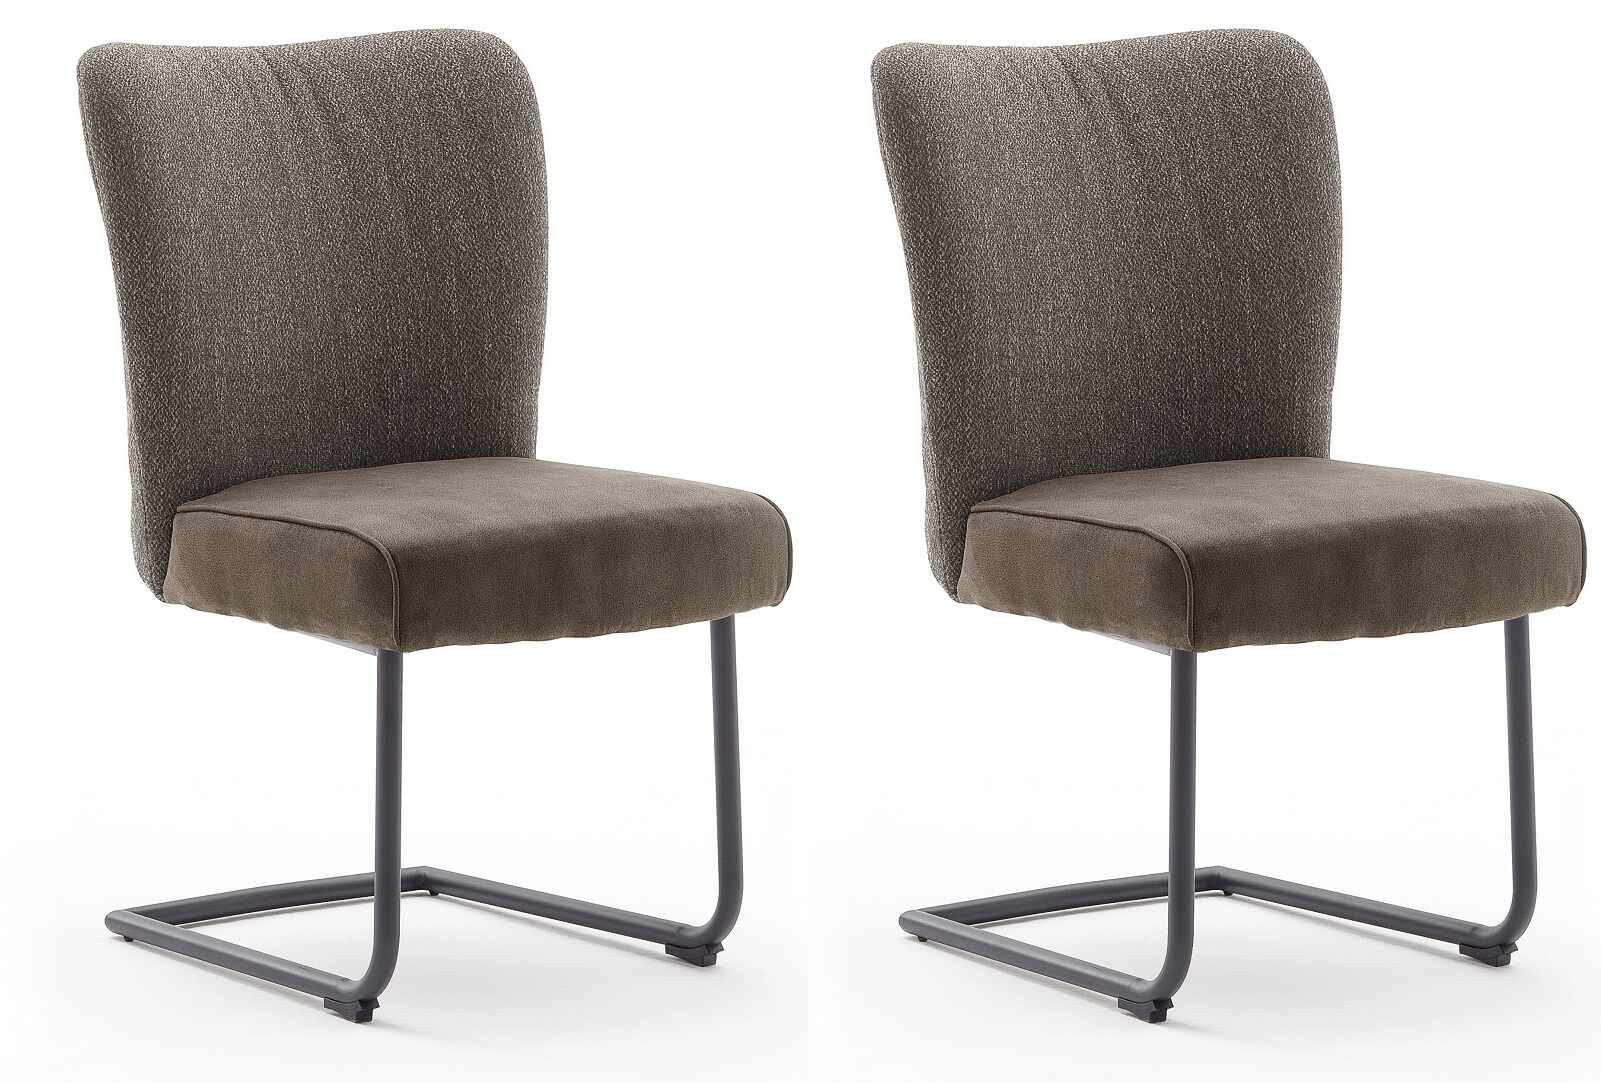 Set 2 scaune tapitate cu stofa si picioare metalice, Santiago A Swing, Cappucino / Negru, l53xA64xH93 cm